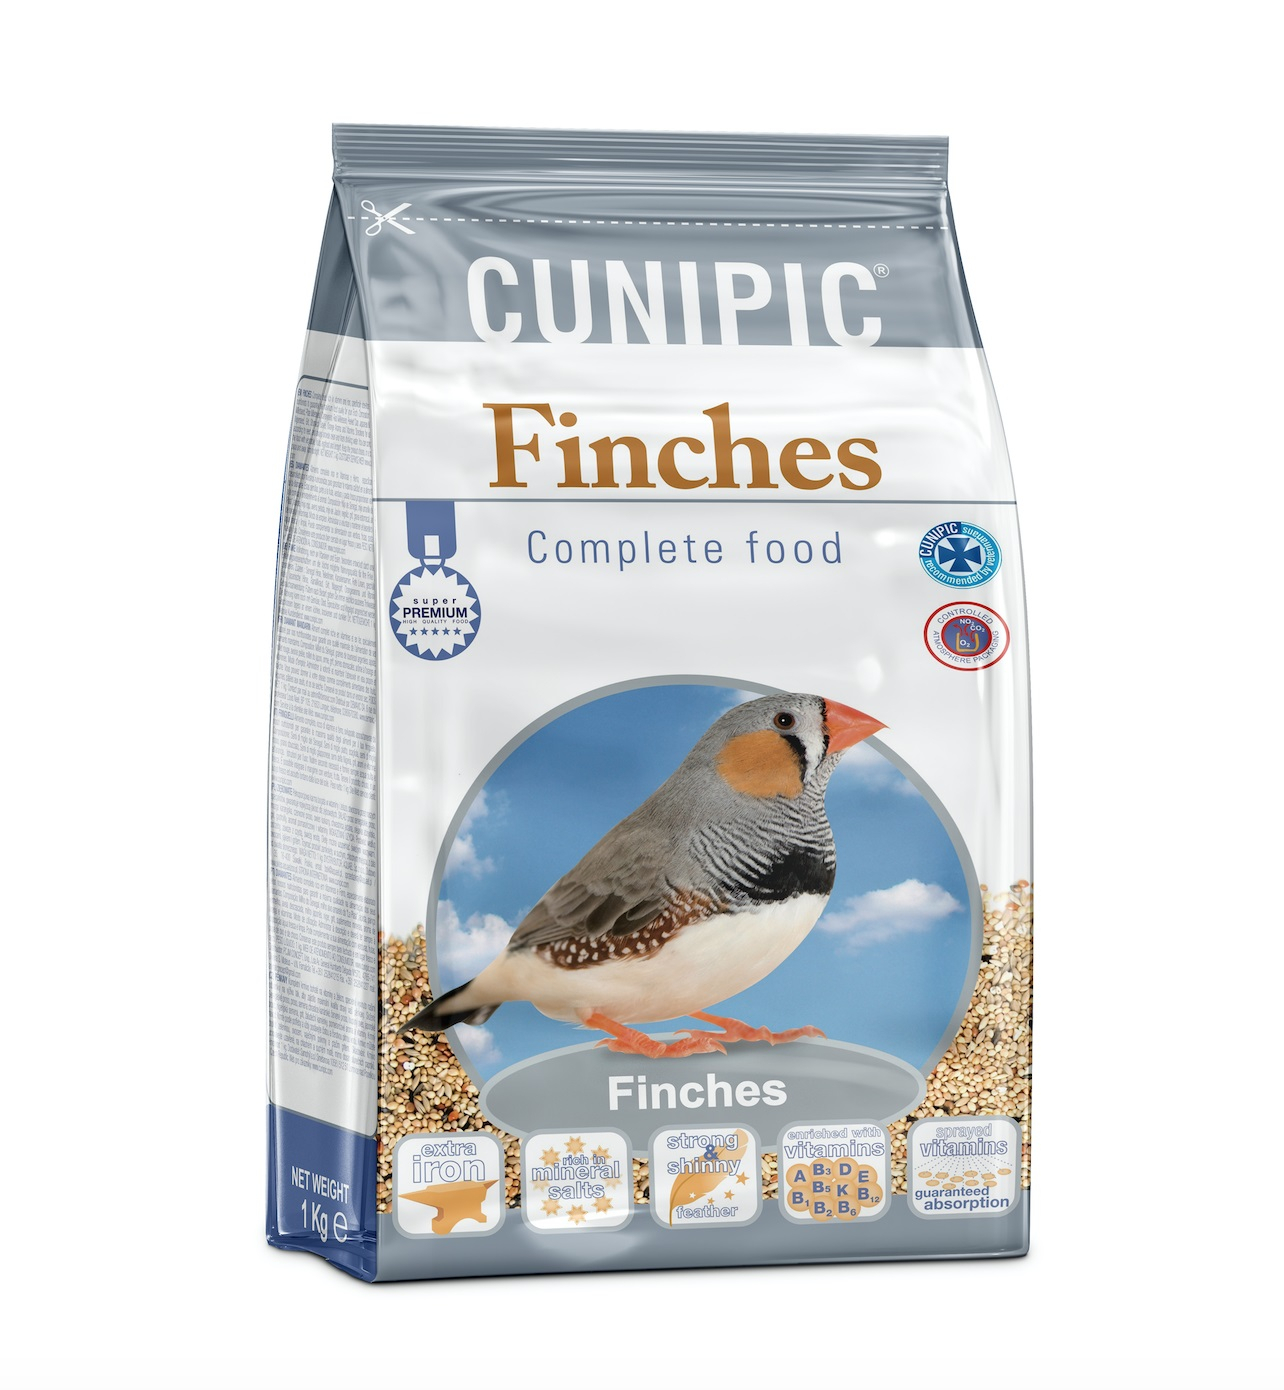 Cunipic Premium Finches Alleinfuttermittel für Diamant Mandarin Texte italien courant